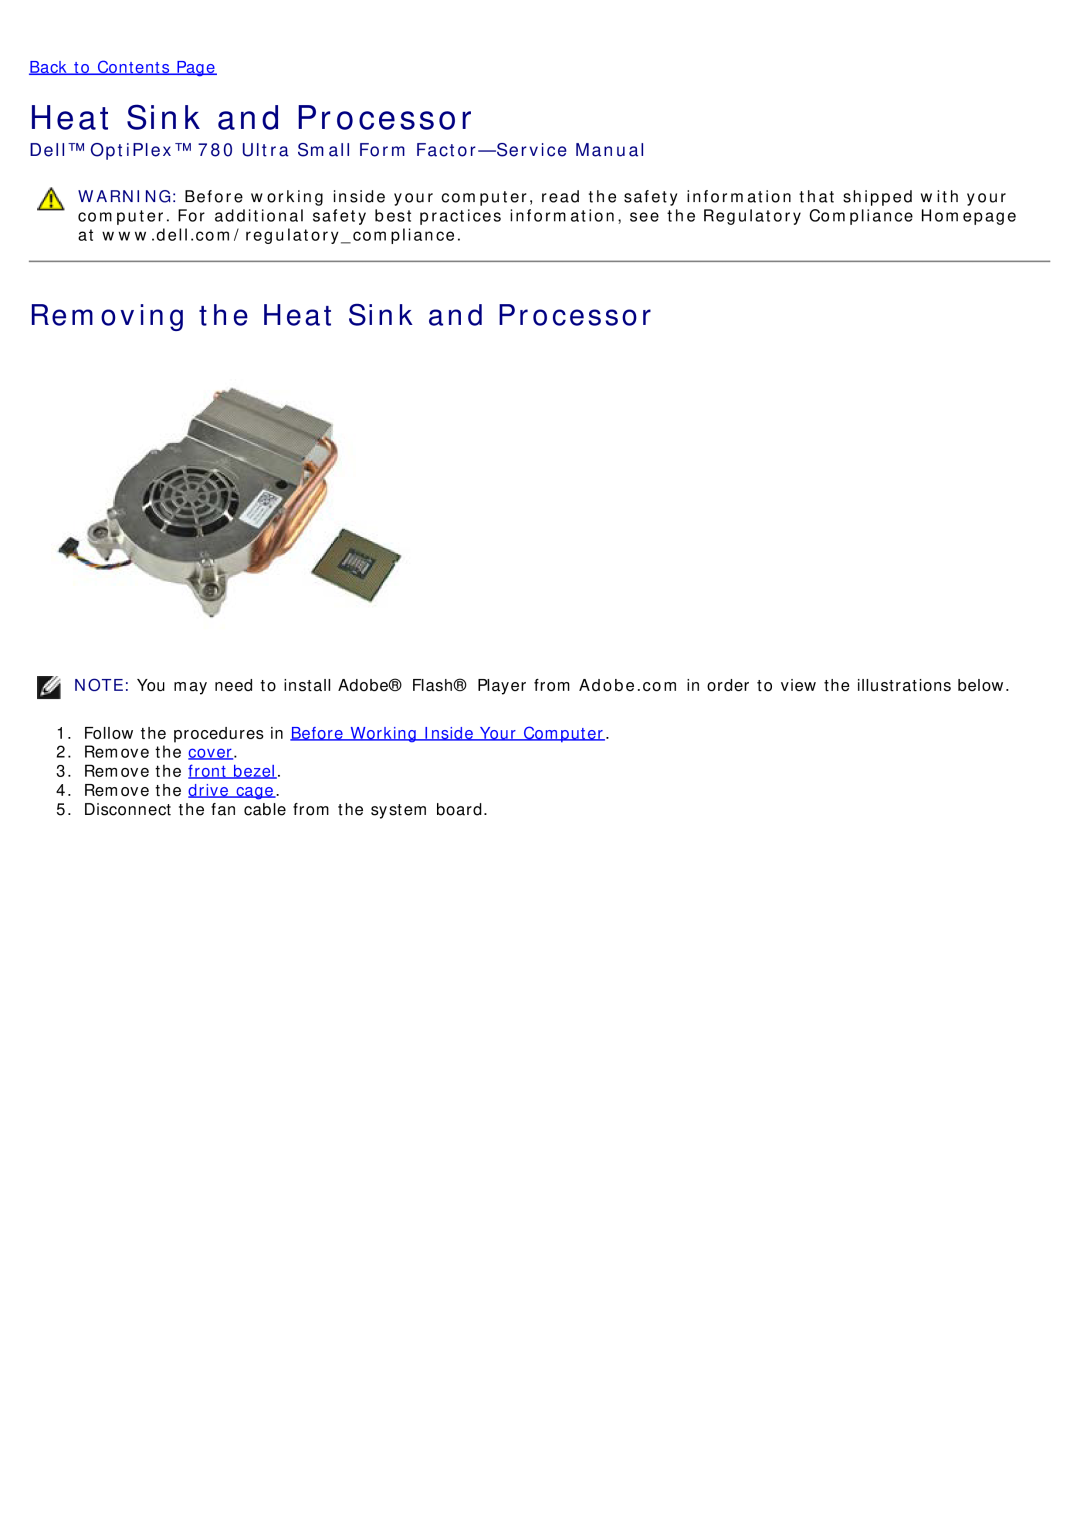 Dell service manual Removing the Heat Sink and Processor, Dell OptiPlex 780 Ultra Small Form Factor-Service Manual 